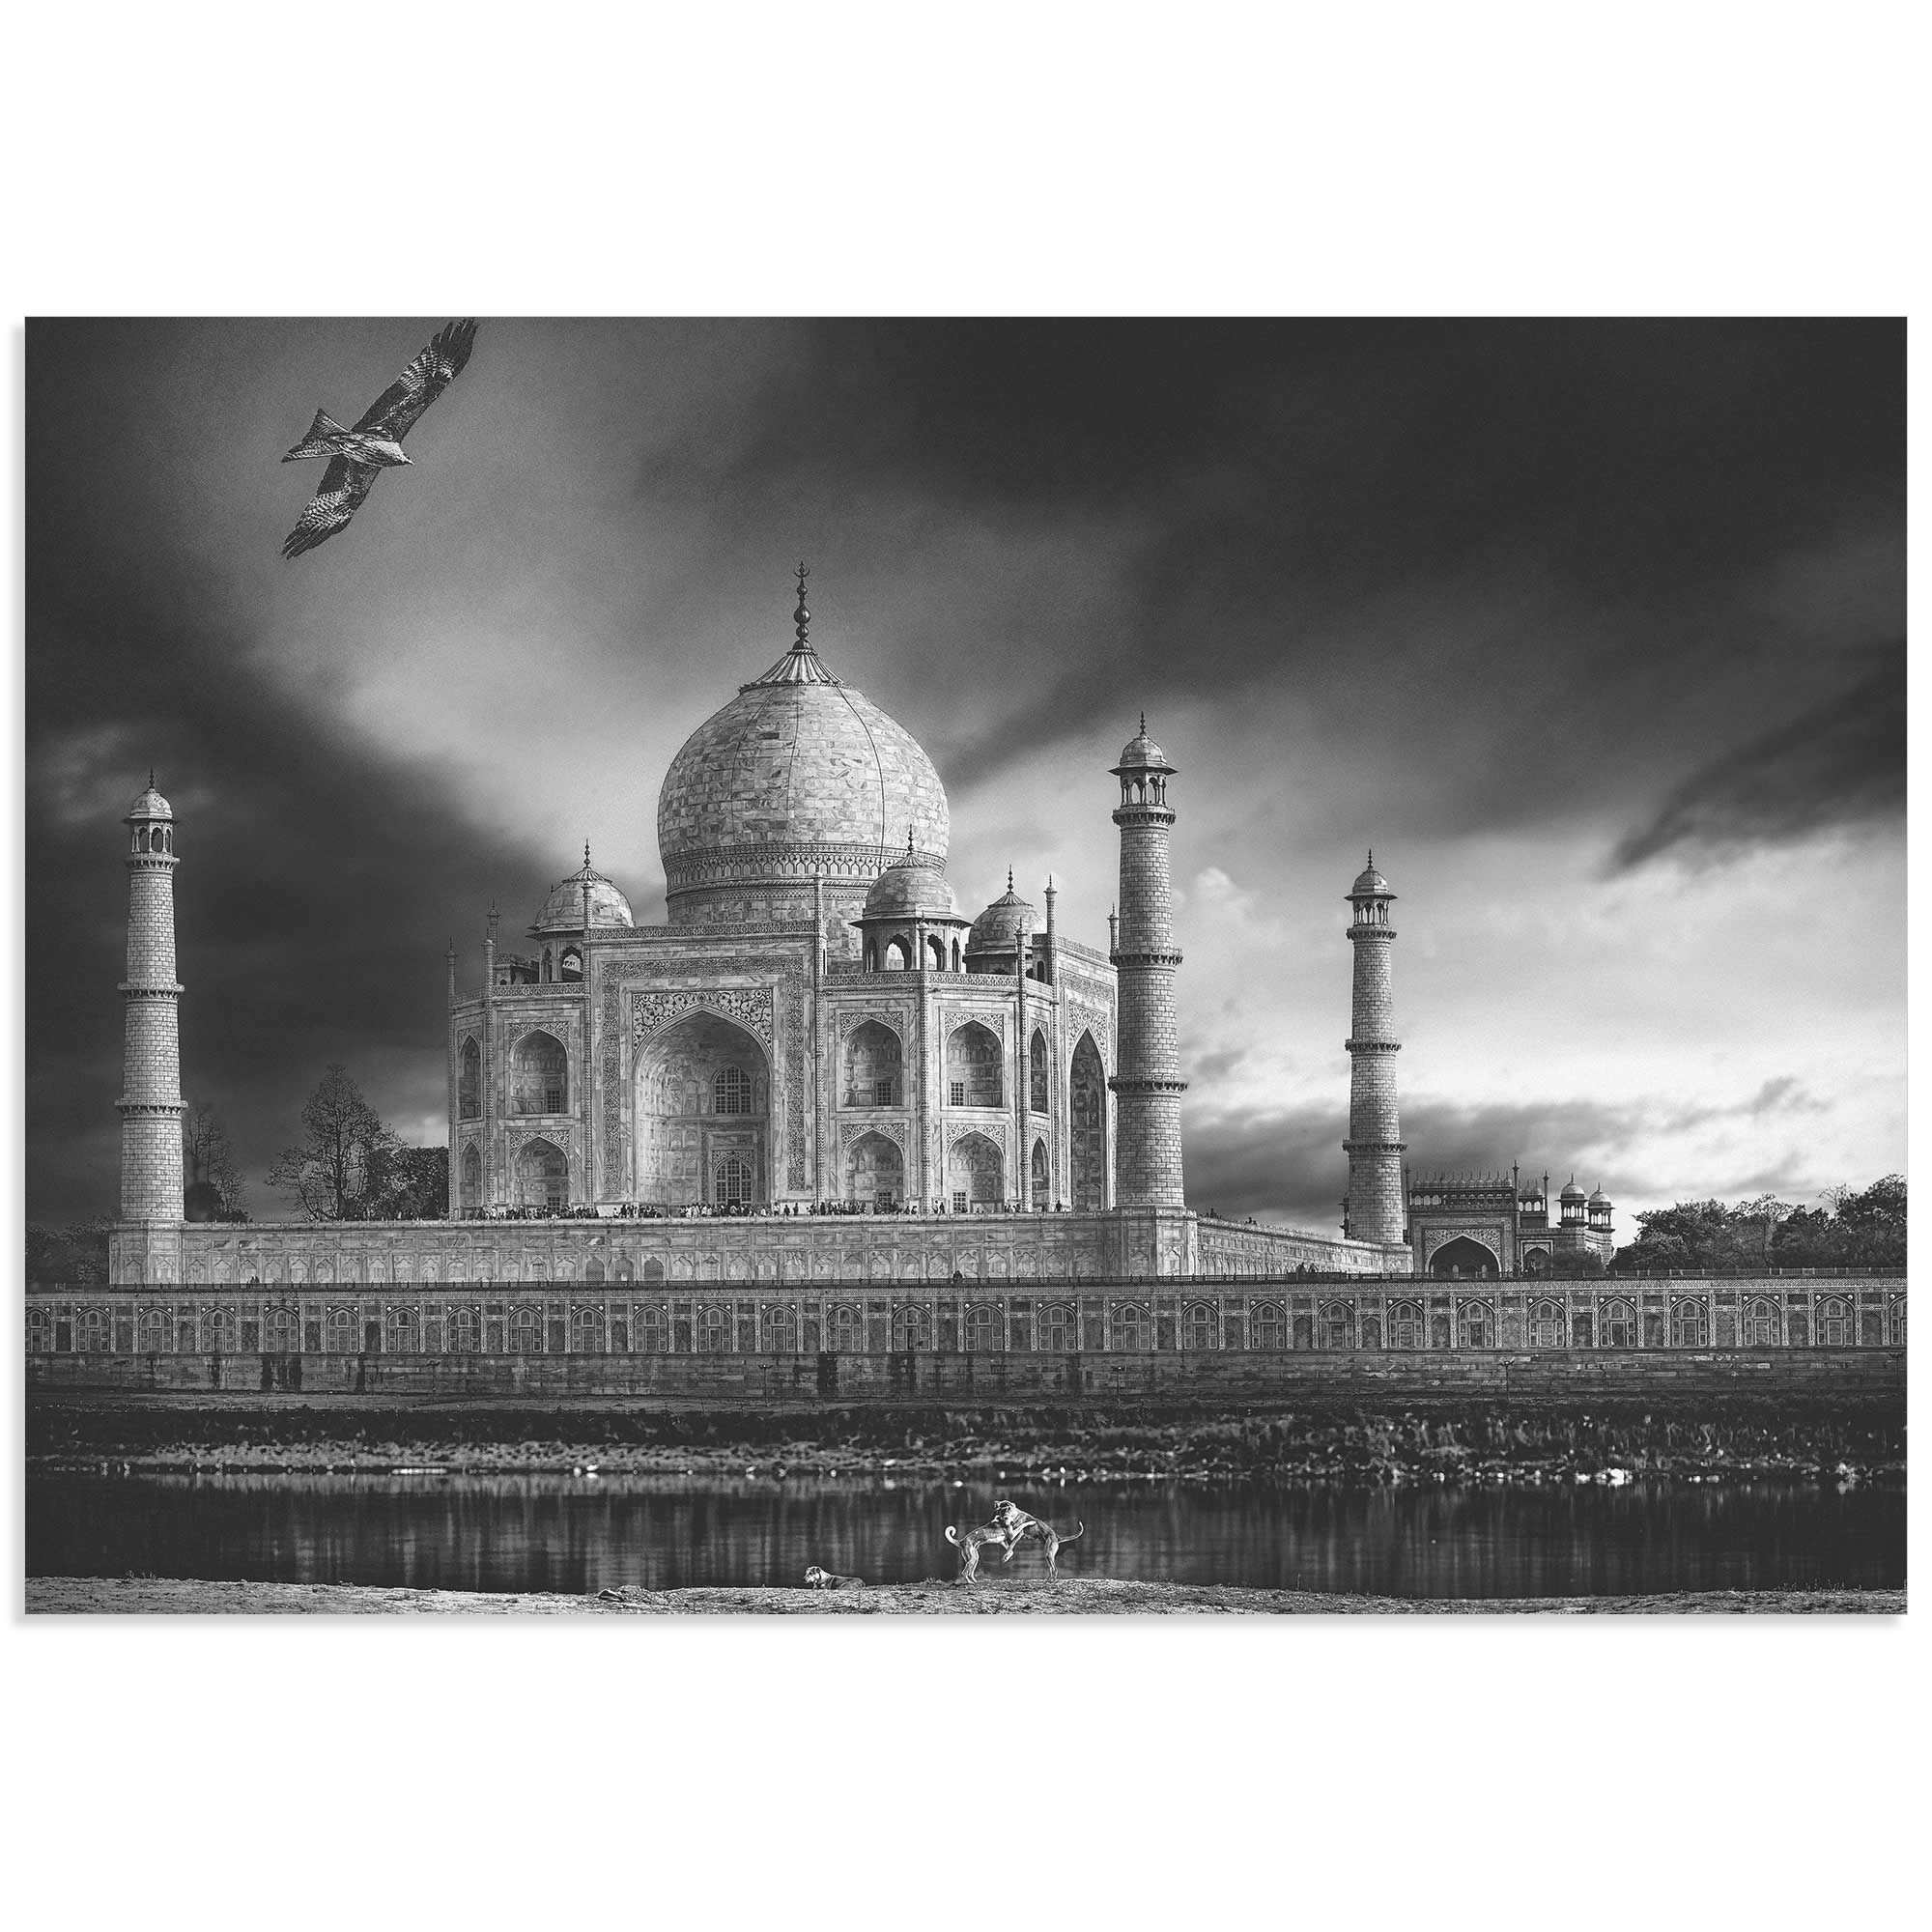 Taj Mahal in Black and White by Piet Flour - Taj Mahal Image on Metal or Acrylic